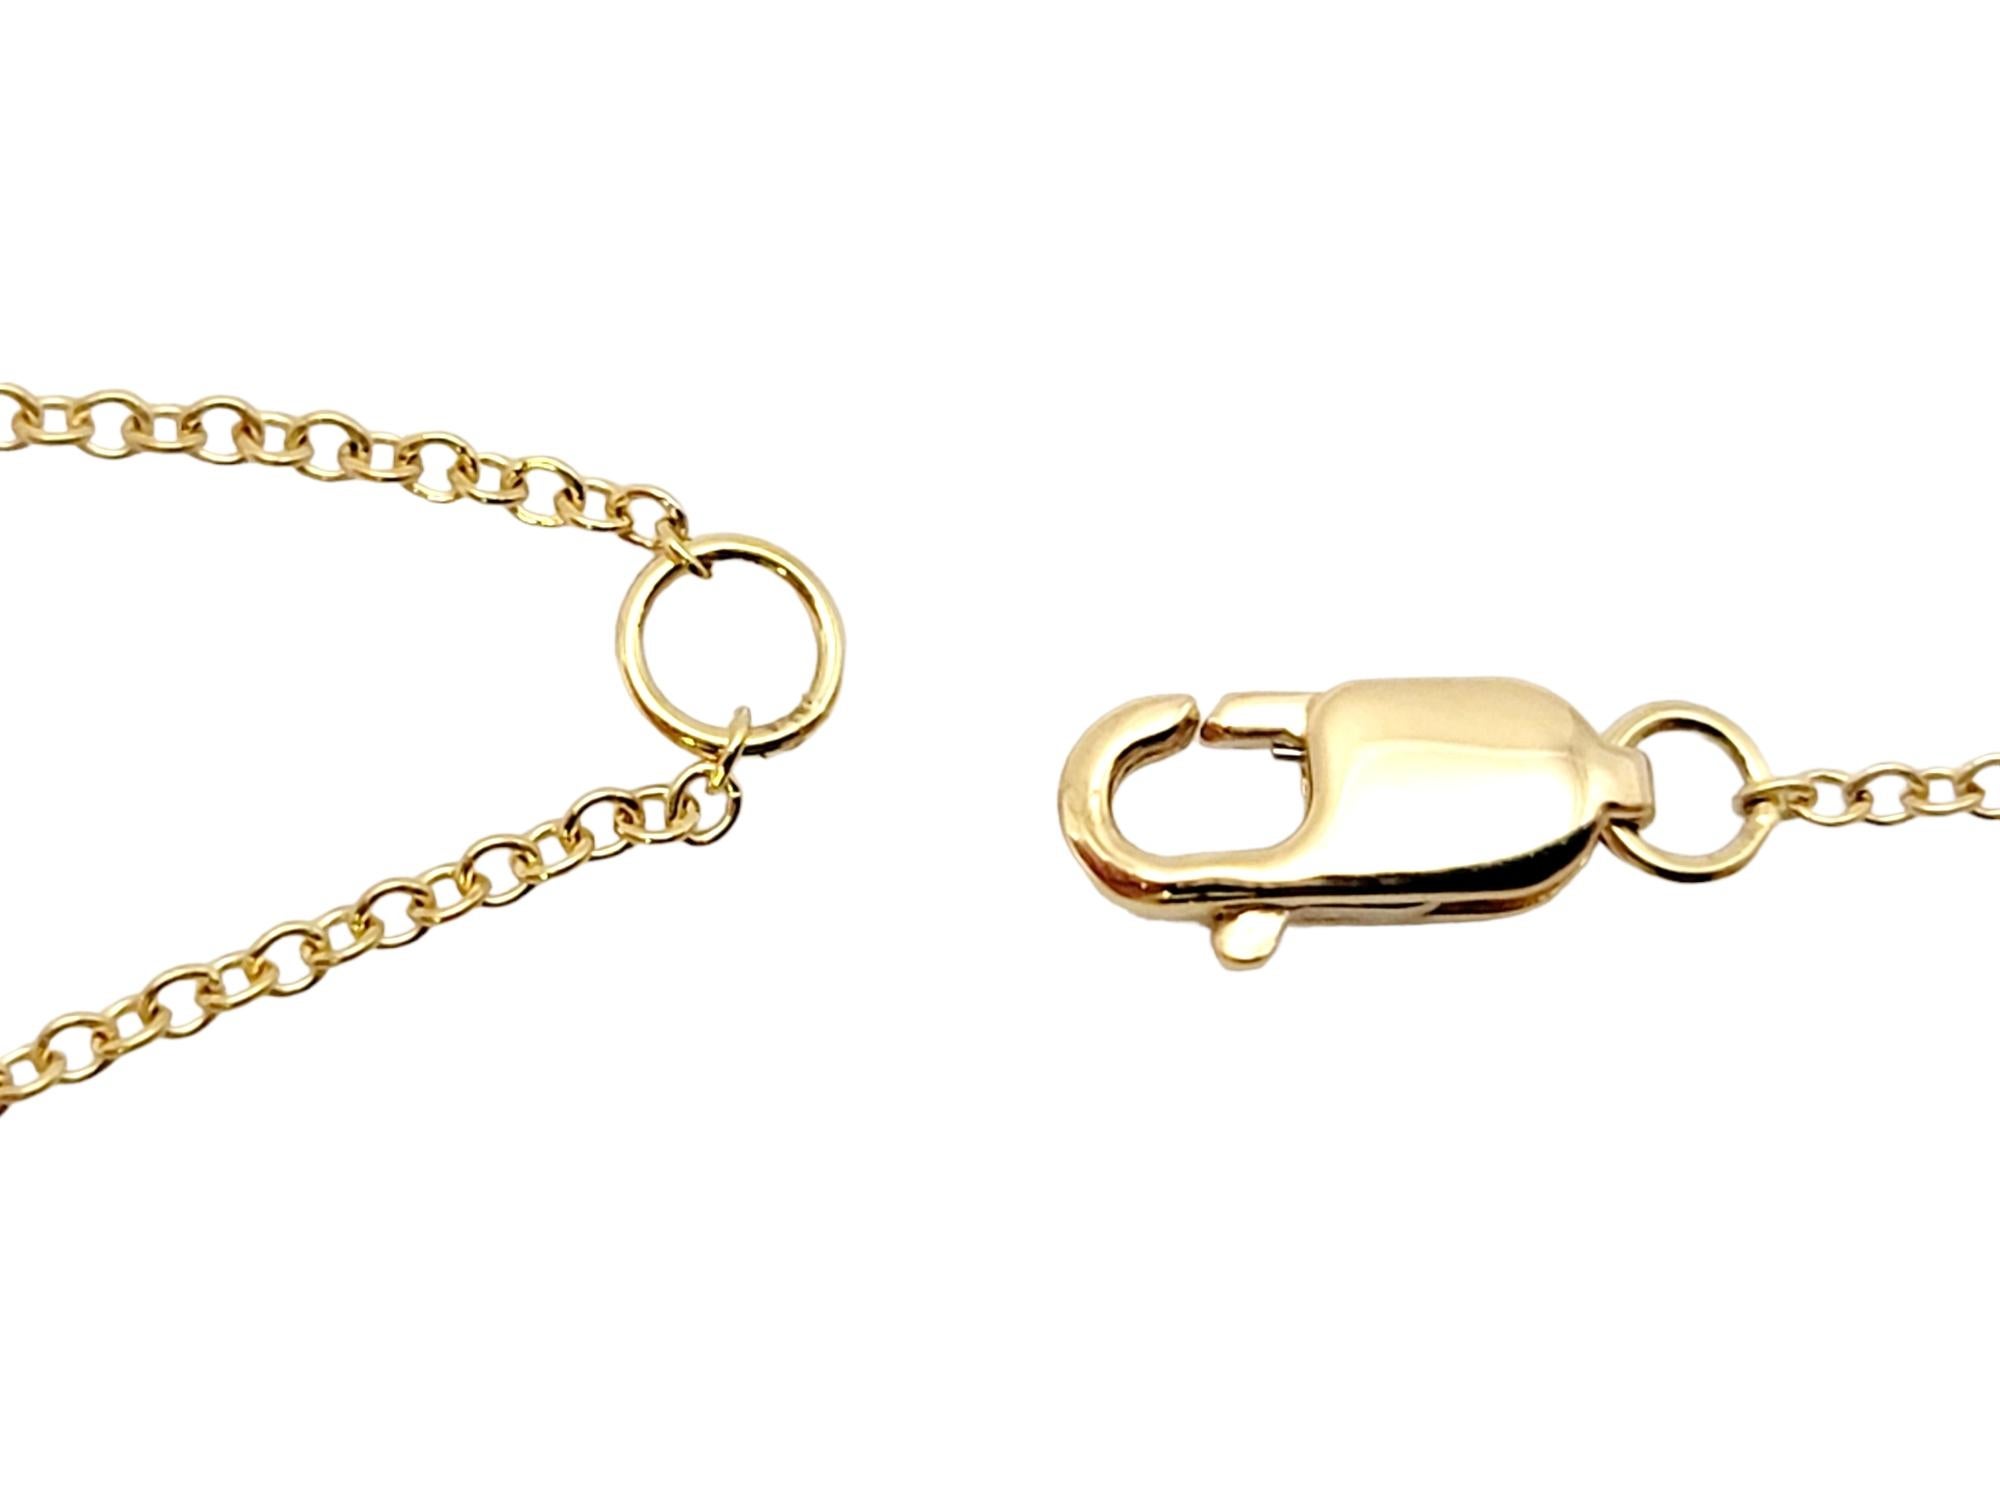 Tiffany & Co. Atlas, collier pendentif en or jaune 18 carats avec pendentif imbriqué en forme de X 4